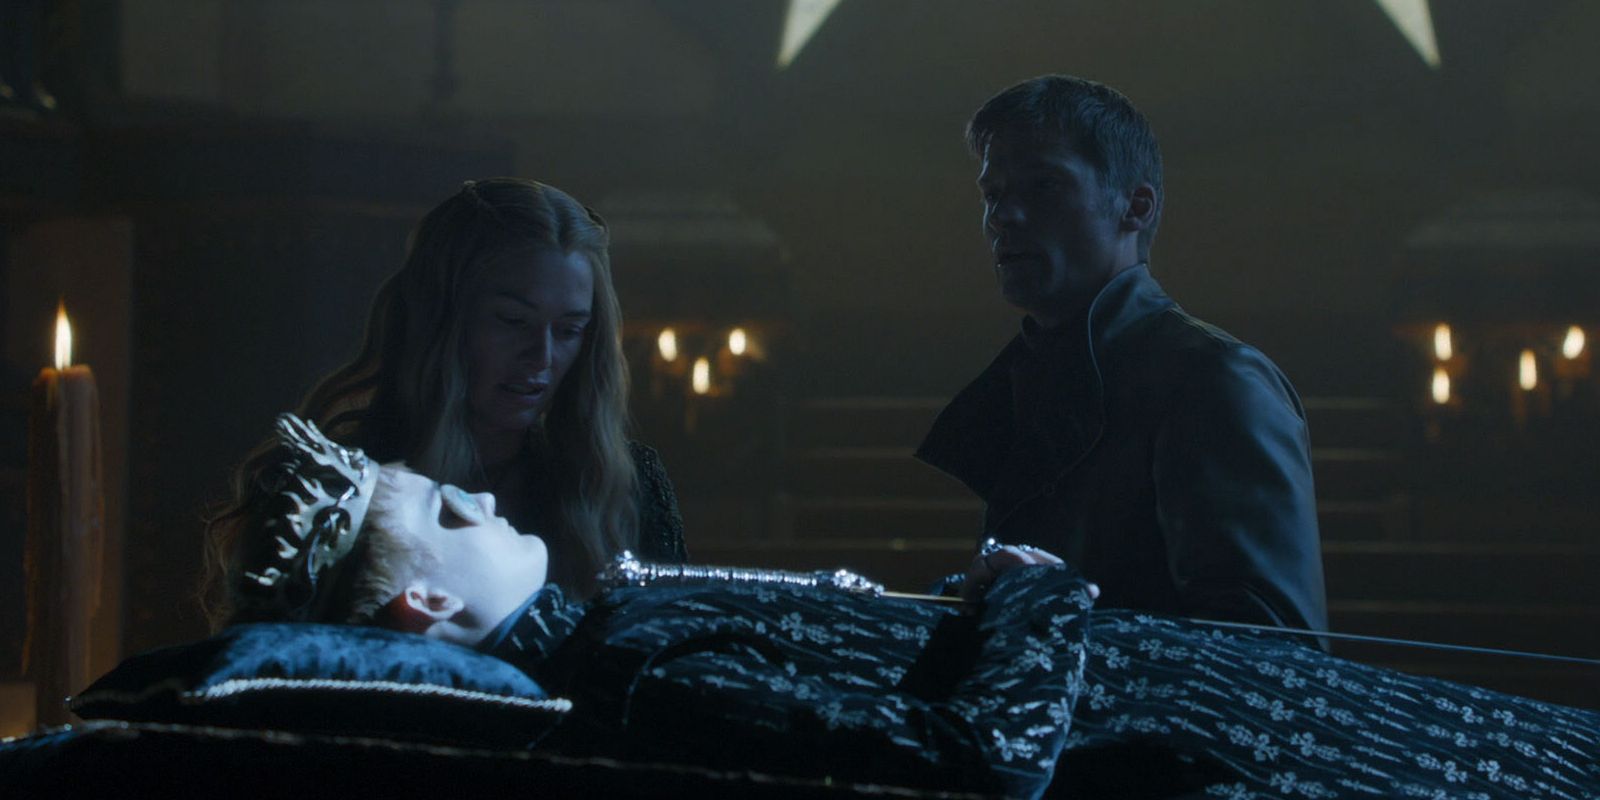 Cersei (Lena Headey) mourns Joffrey (Jack Gleeson), while Jamie (Nicolaj Coster-Waldau) tries to comfort her